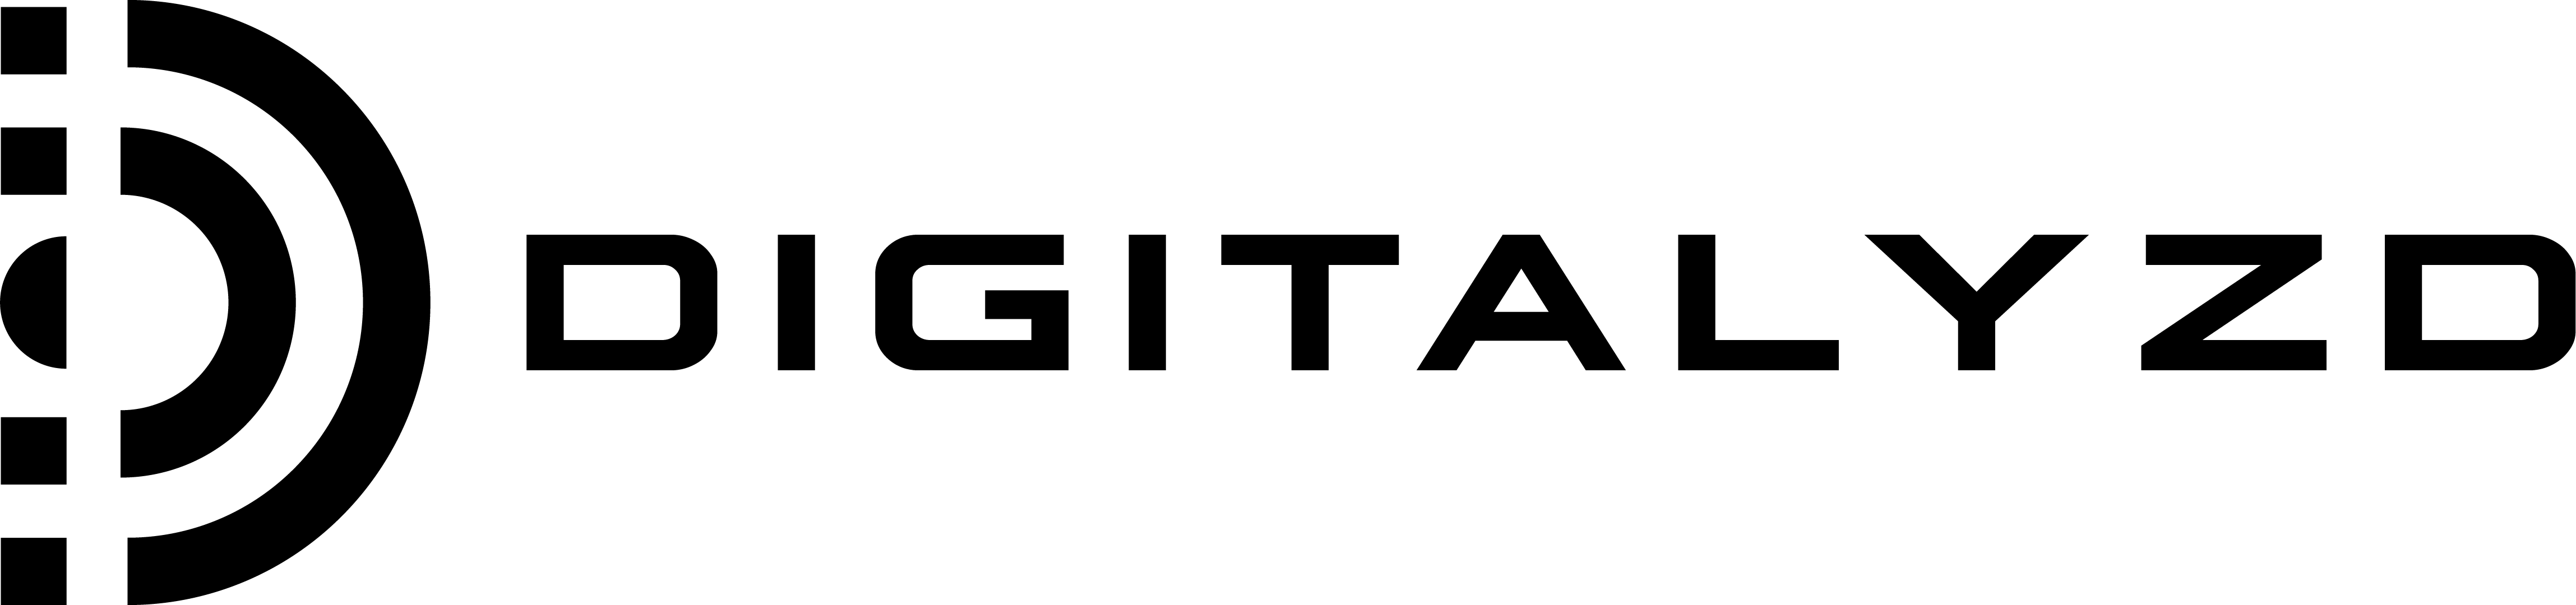 Digitalyzd marketing agency logo